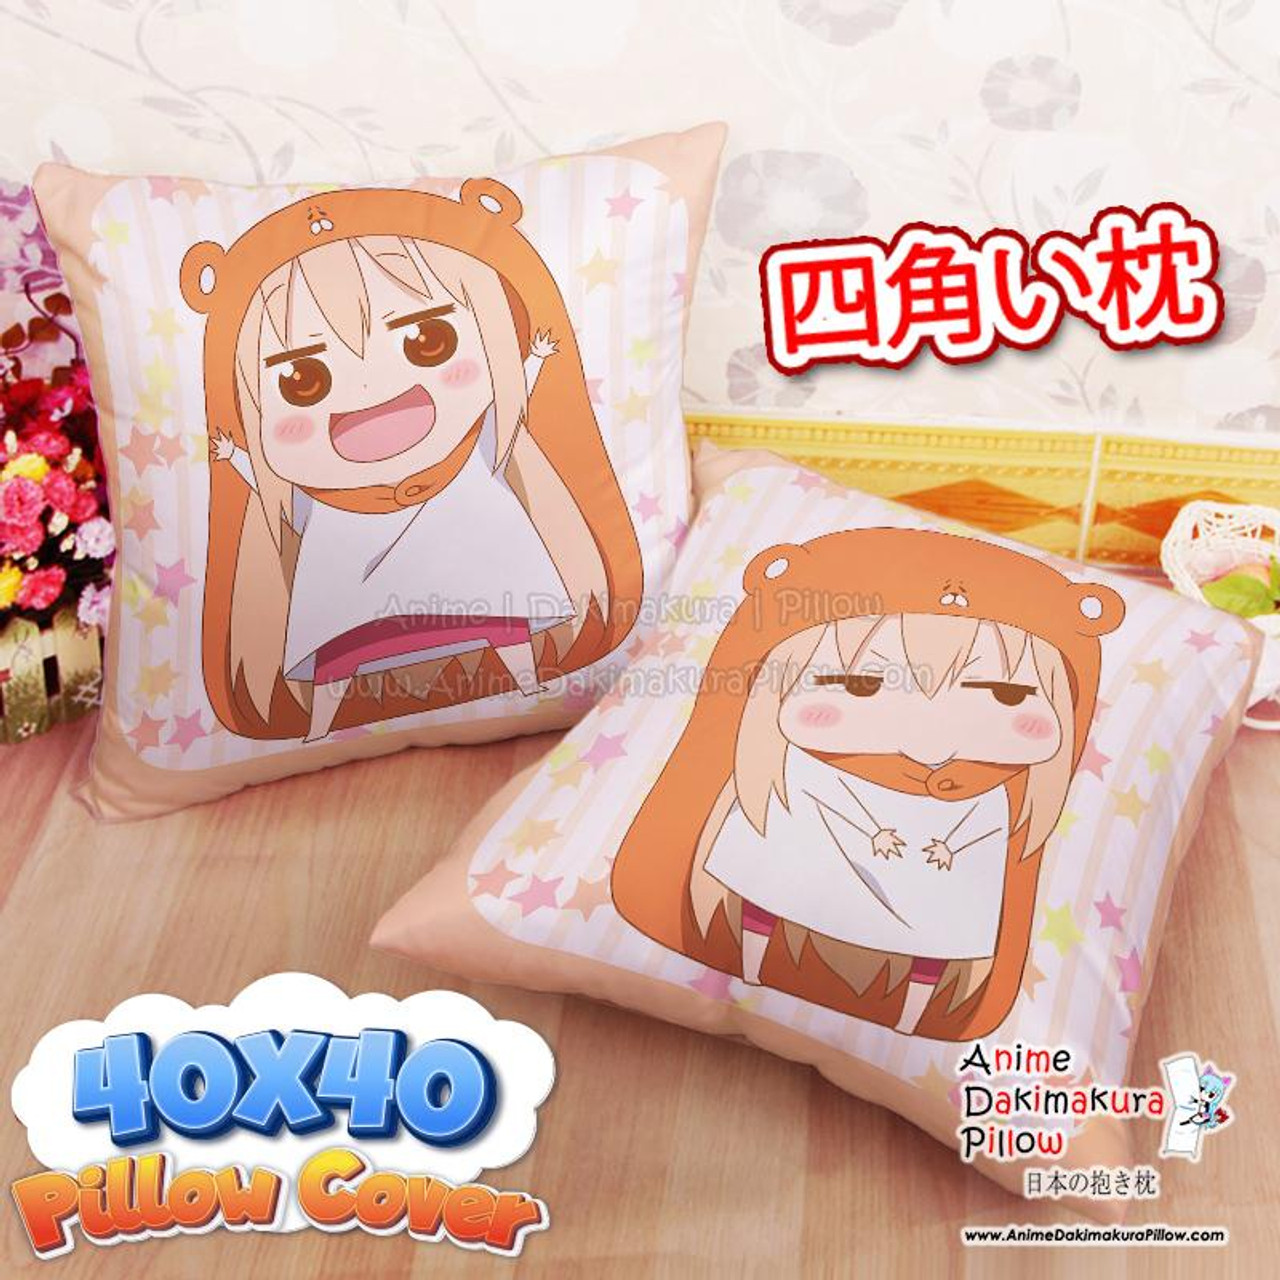 Myriad Colors Phantom World - Online Shopping for Anime Dakimakura Pillow  with Free Shipping